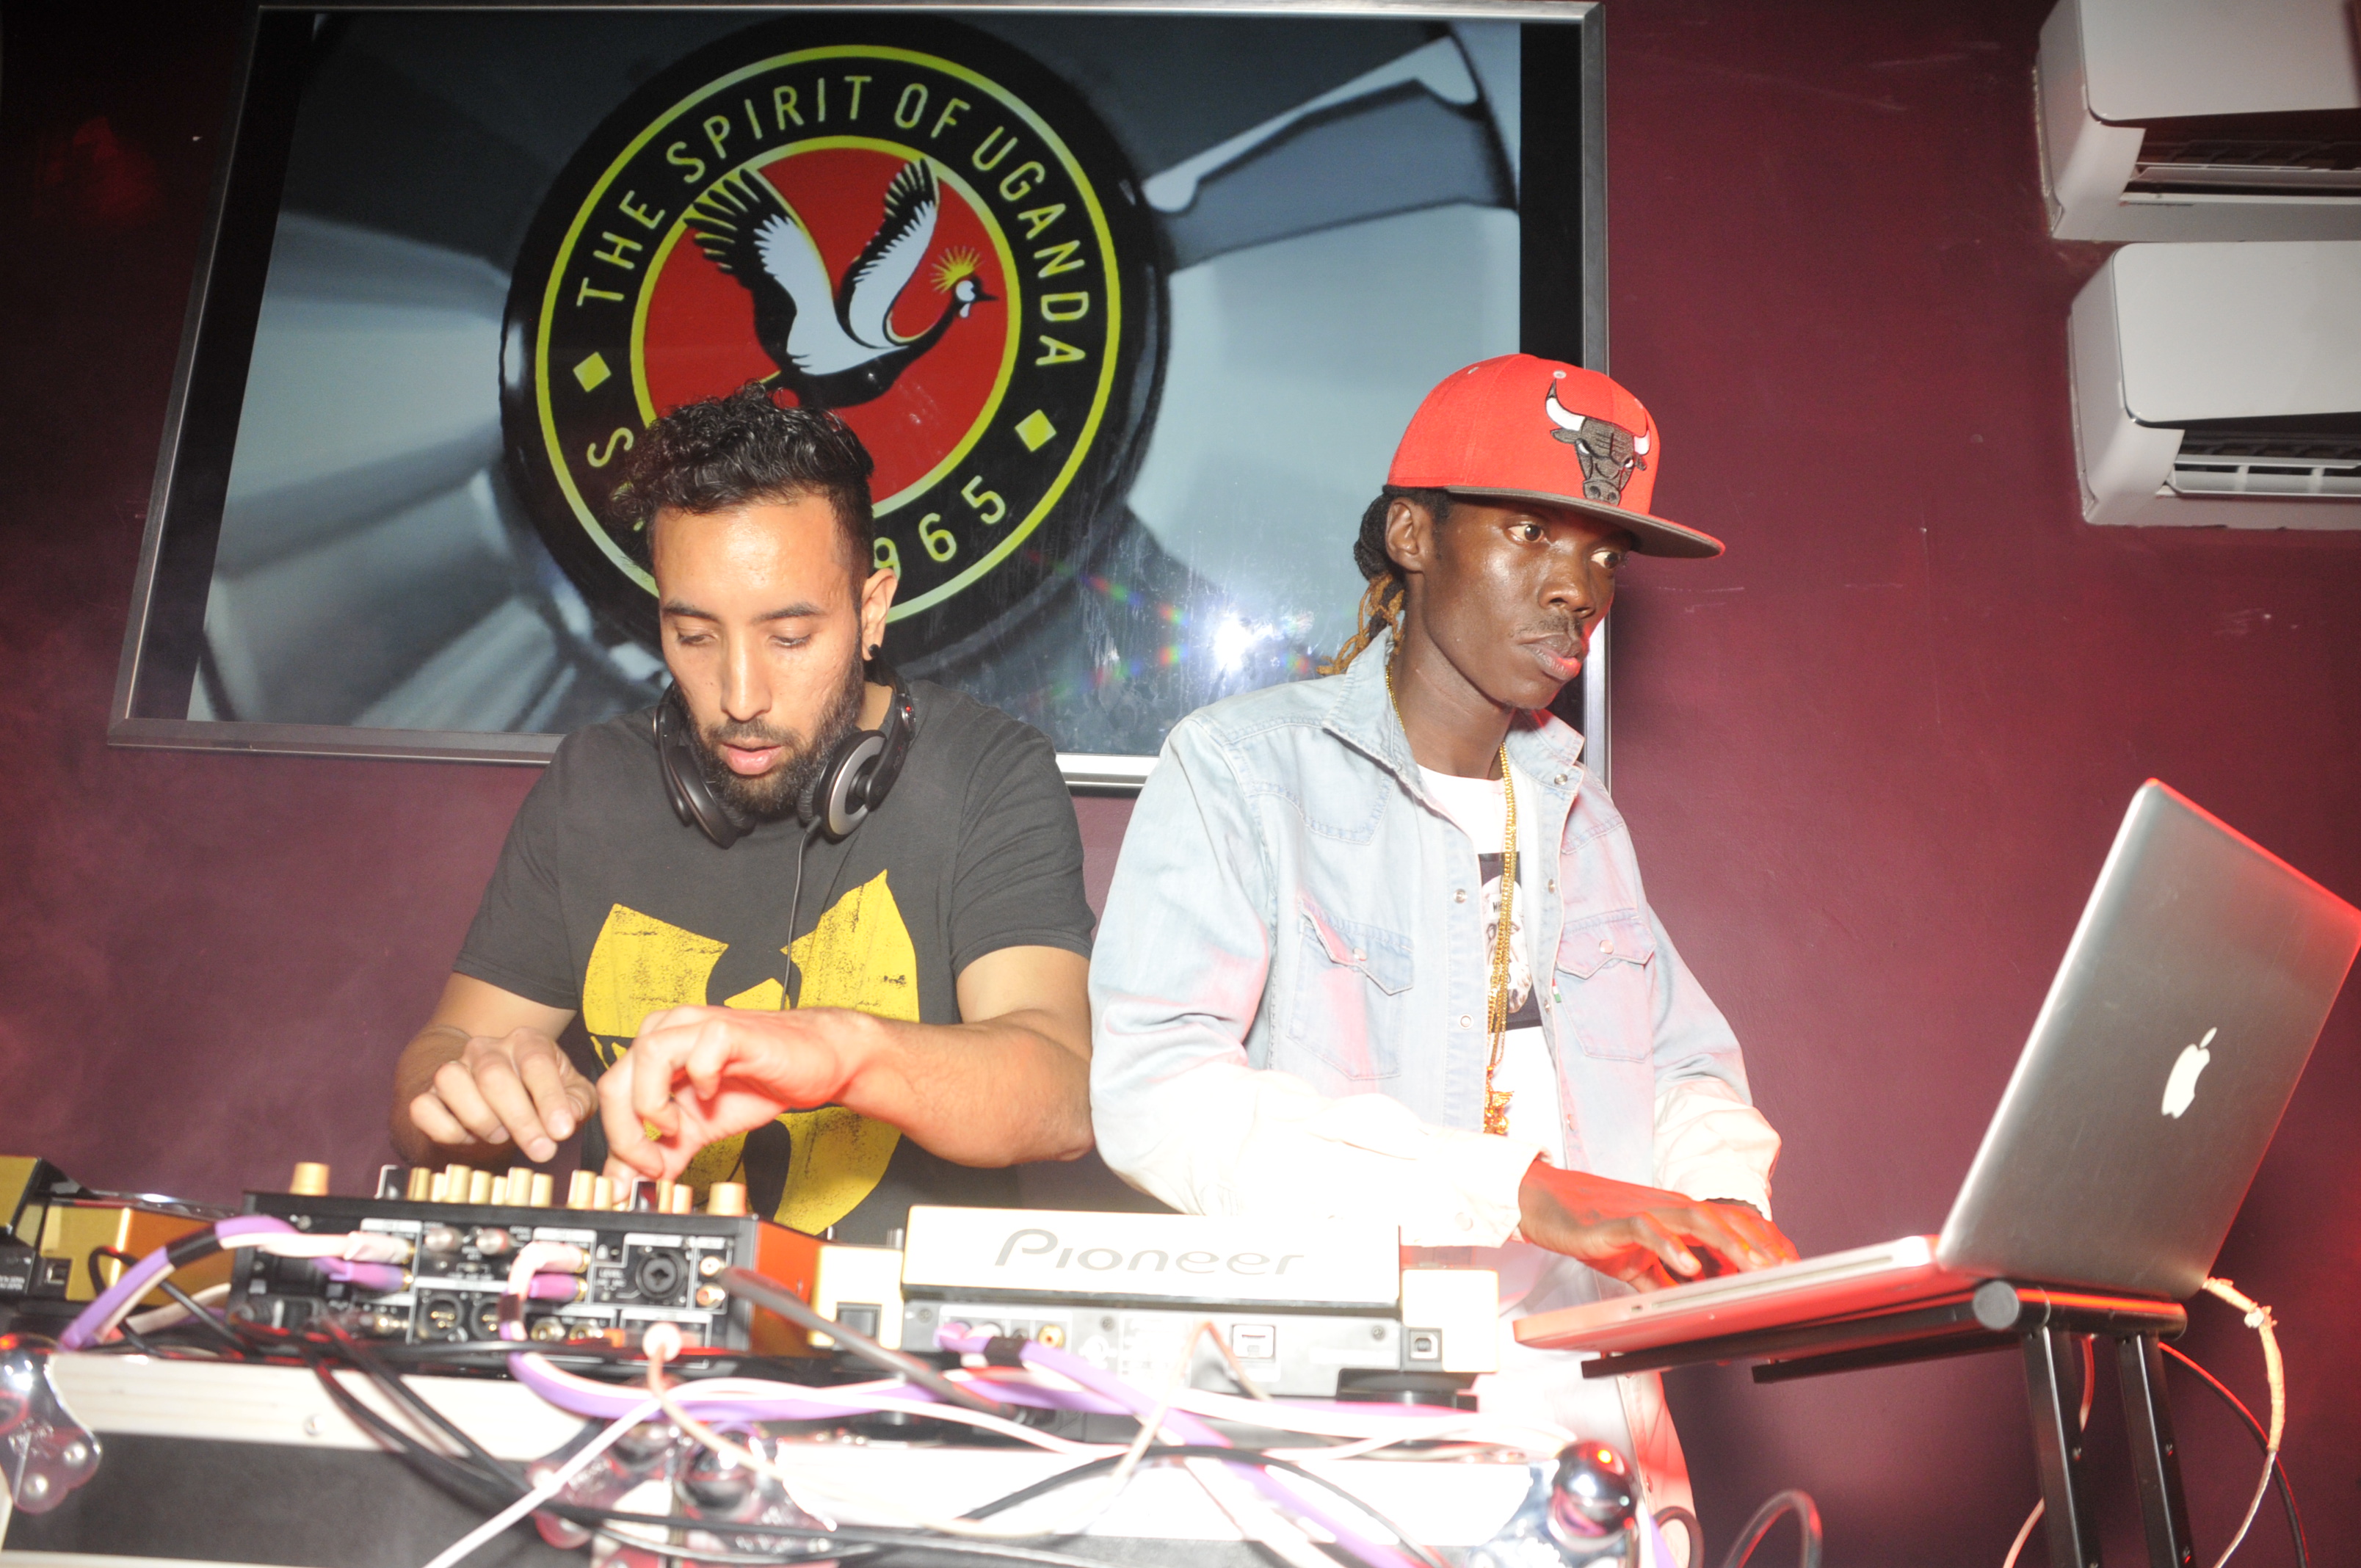 DJs Crisio and Urbanstar do their thing